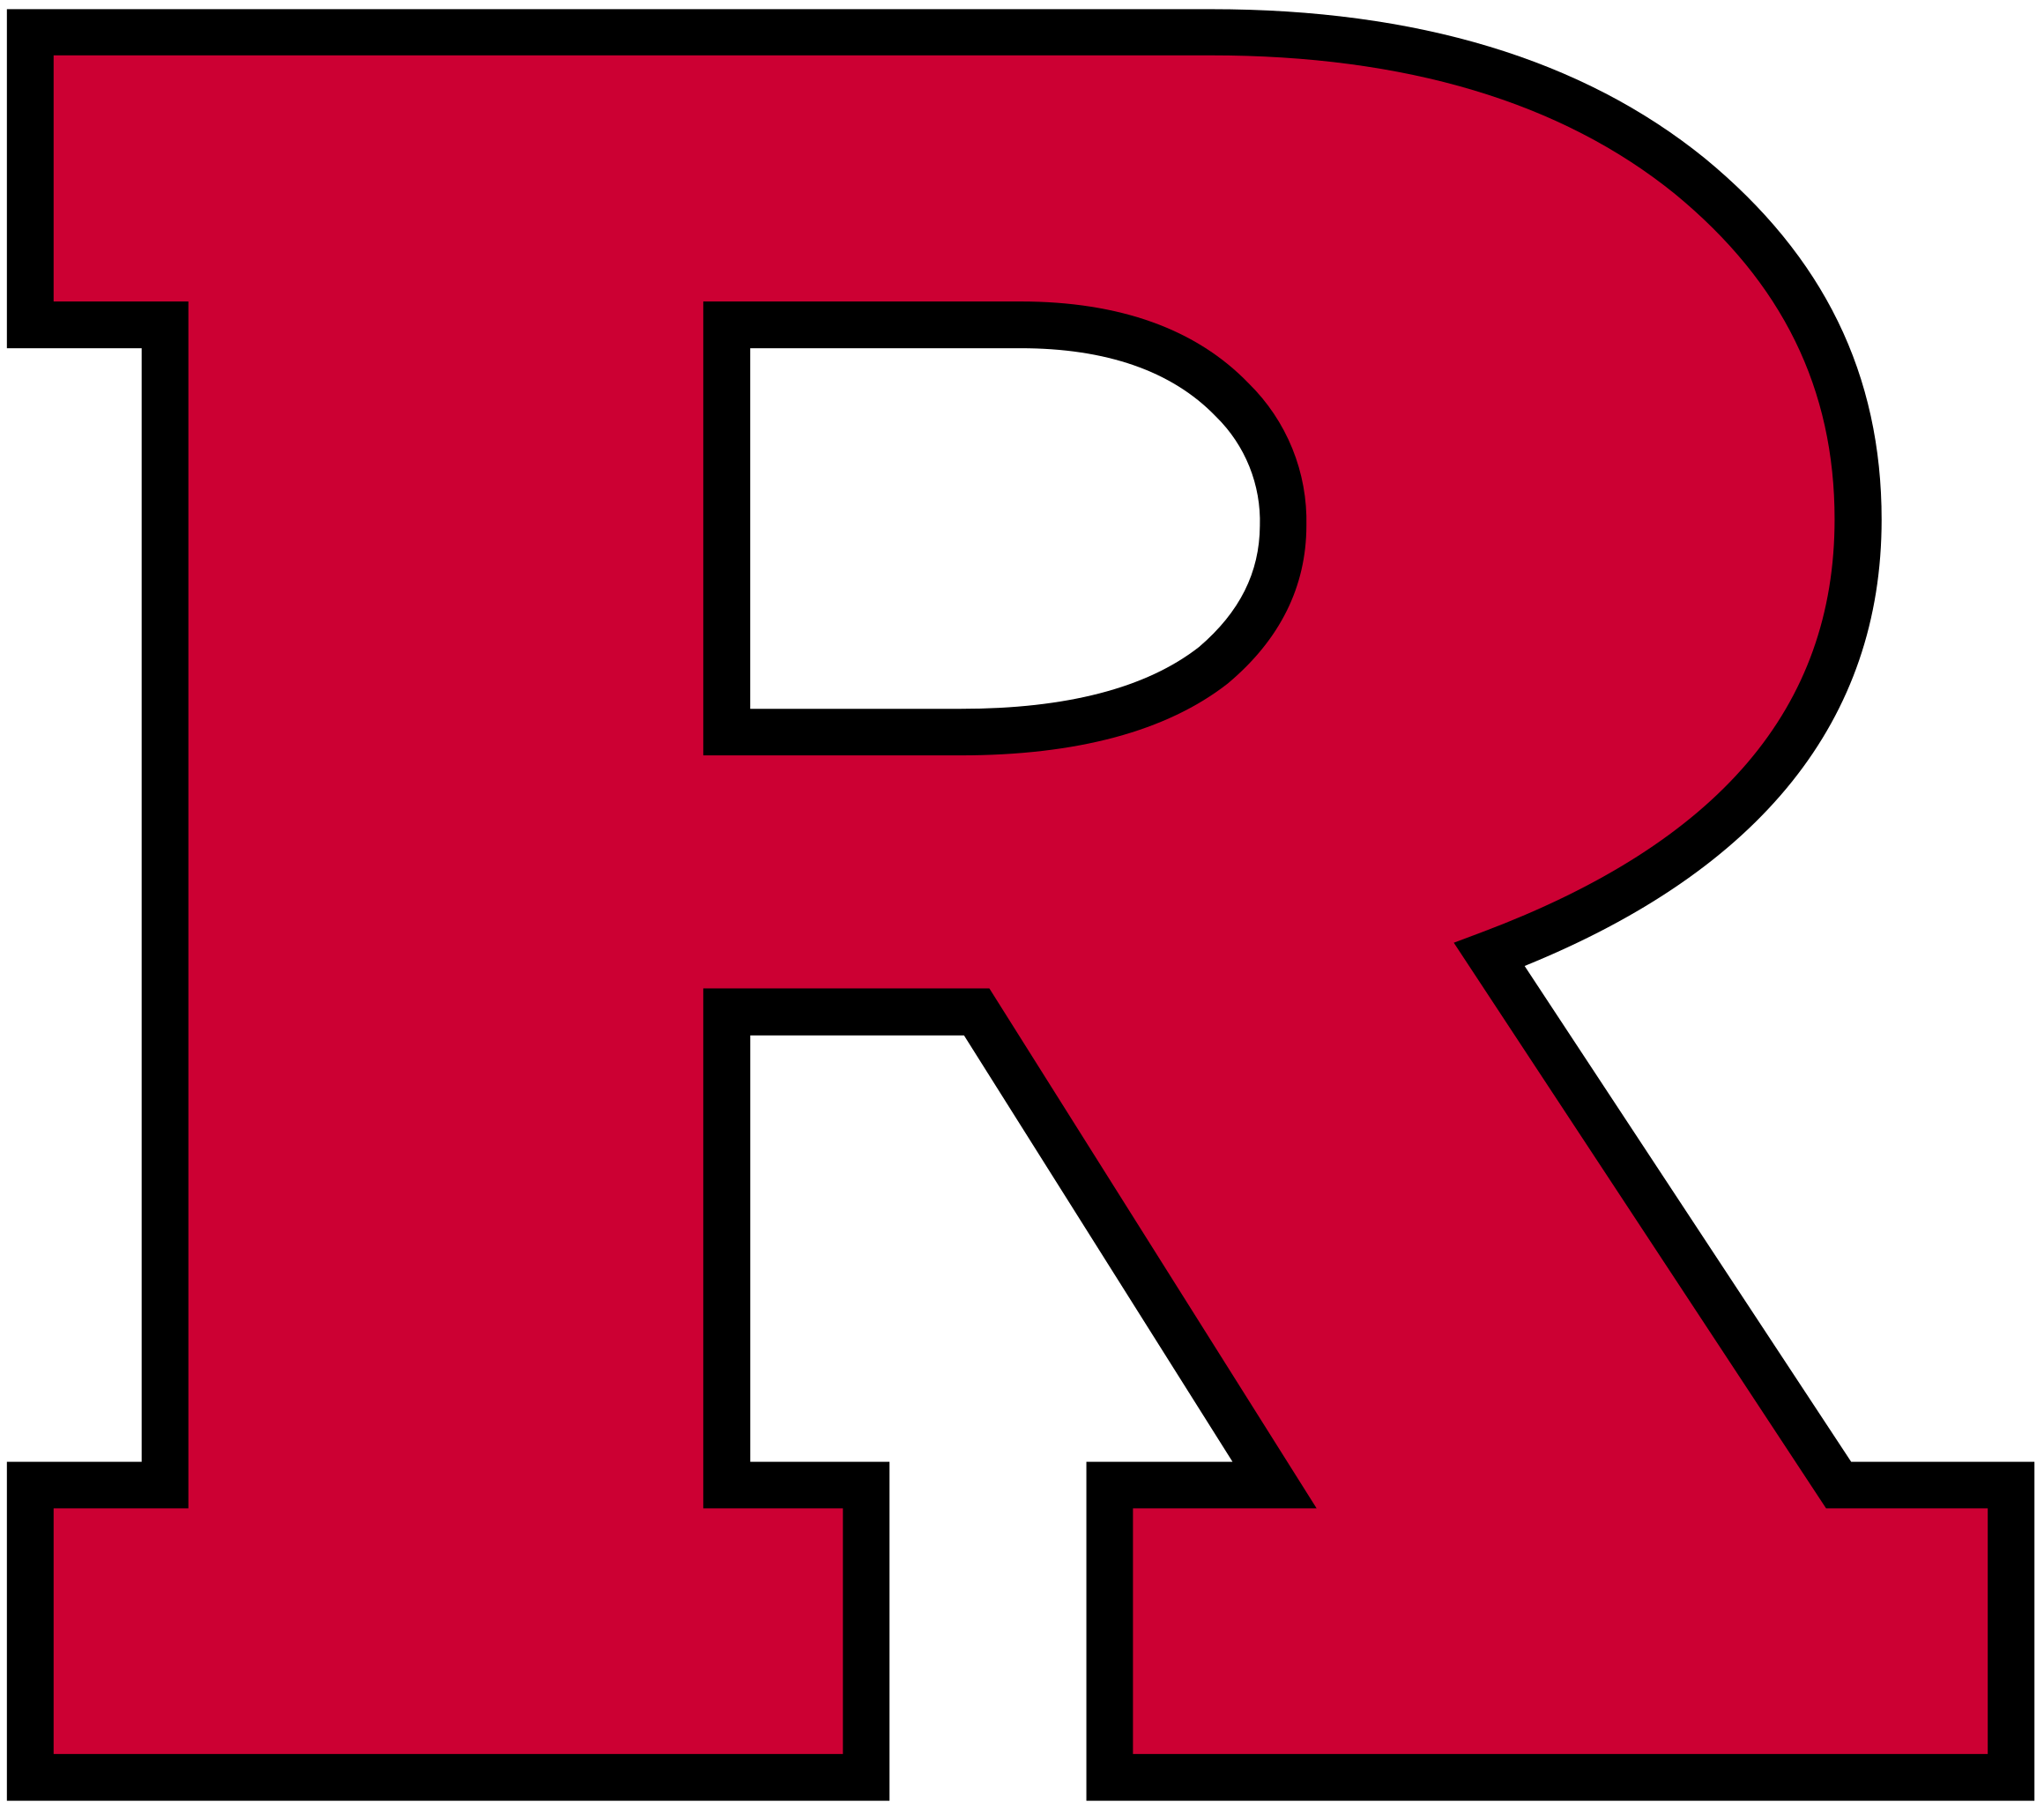 https://upload.wikimedia.org/wikipedia/commons/thumb/b/b6/Rutgers_Scarlet_Knights_logo.svg/2319px-Rutgers_Scarlet_Knights_logo.svg.png